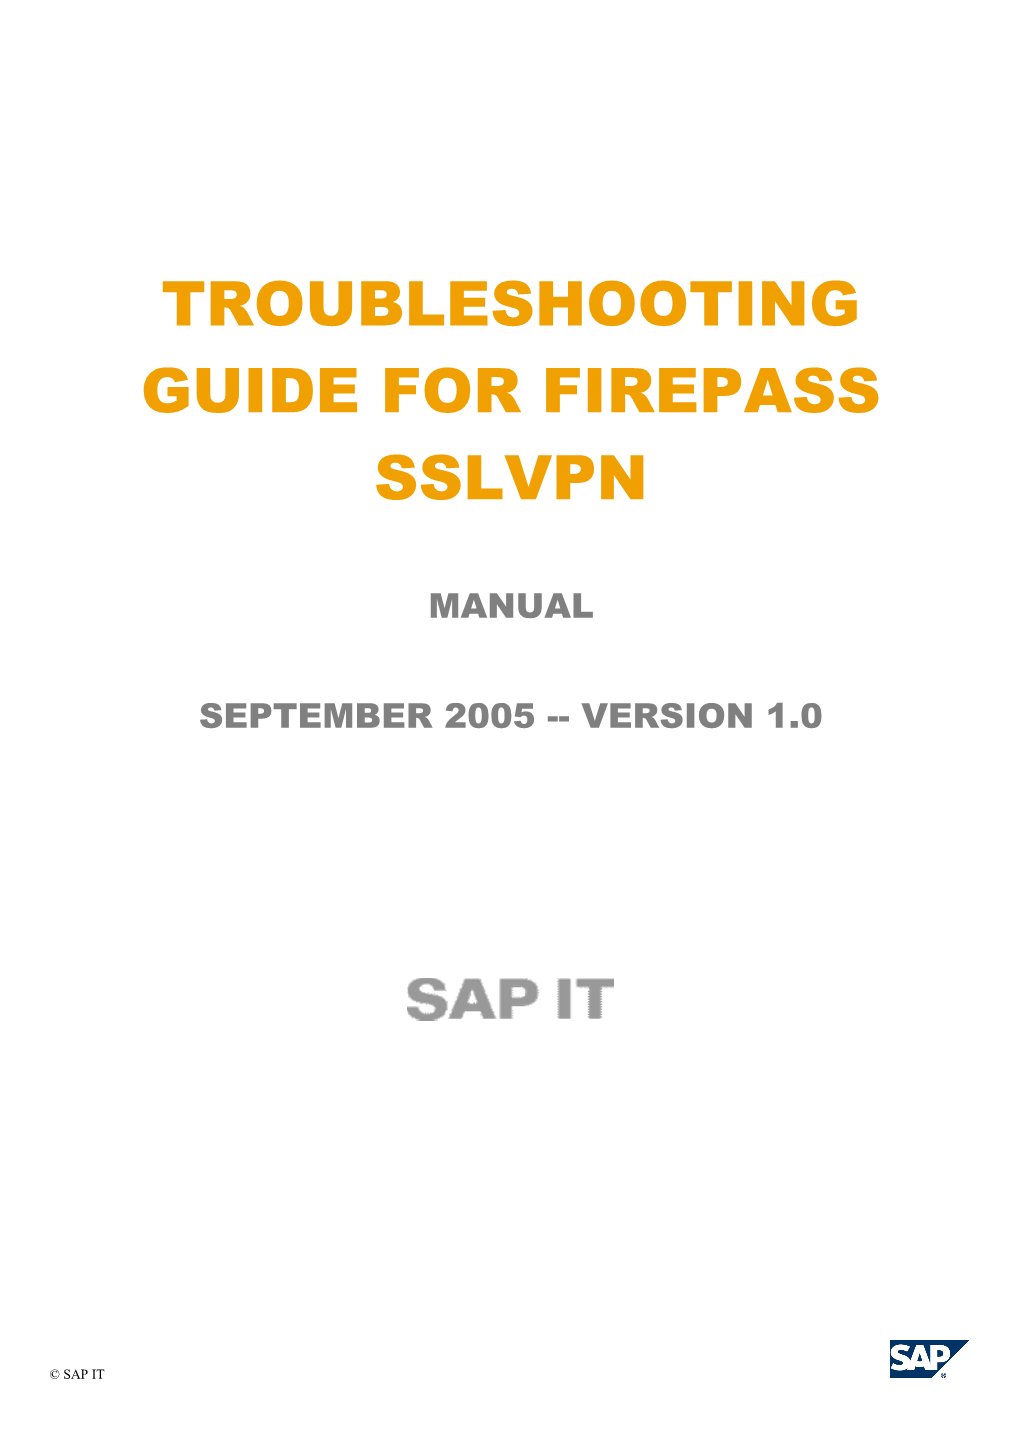 Troubleshooting Guide for Firepass Sslvpn